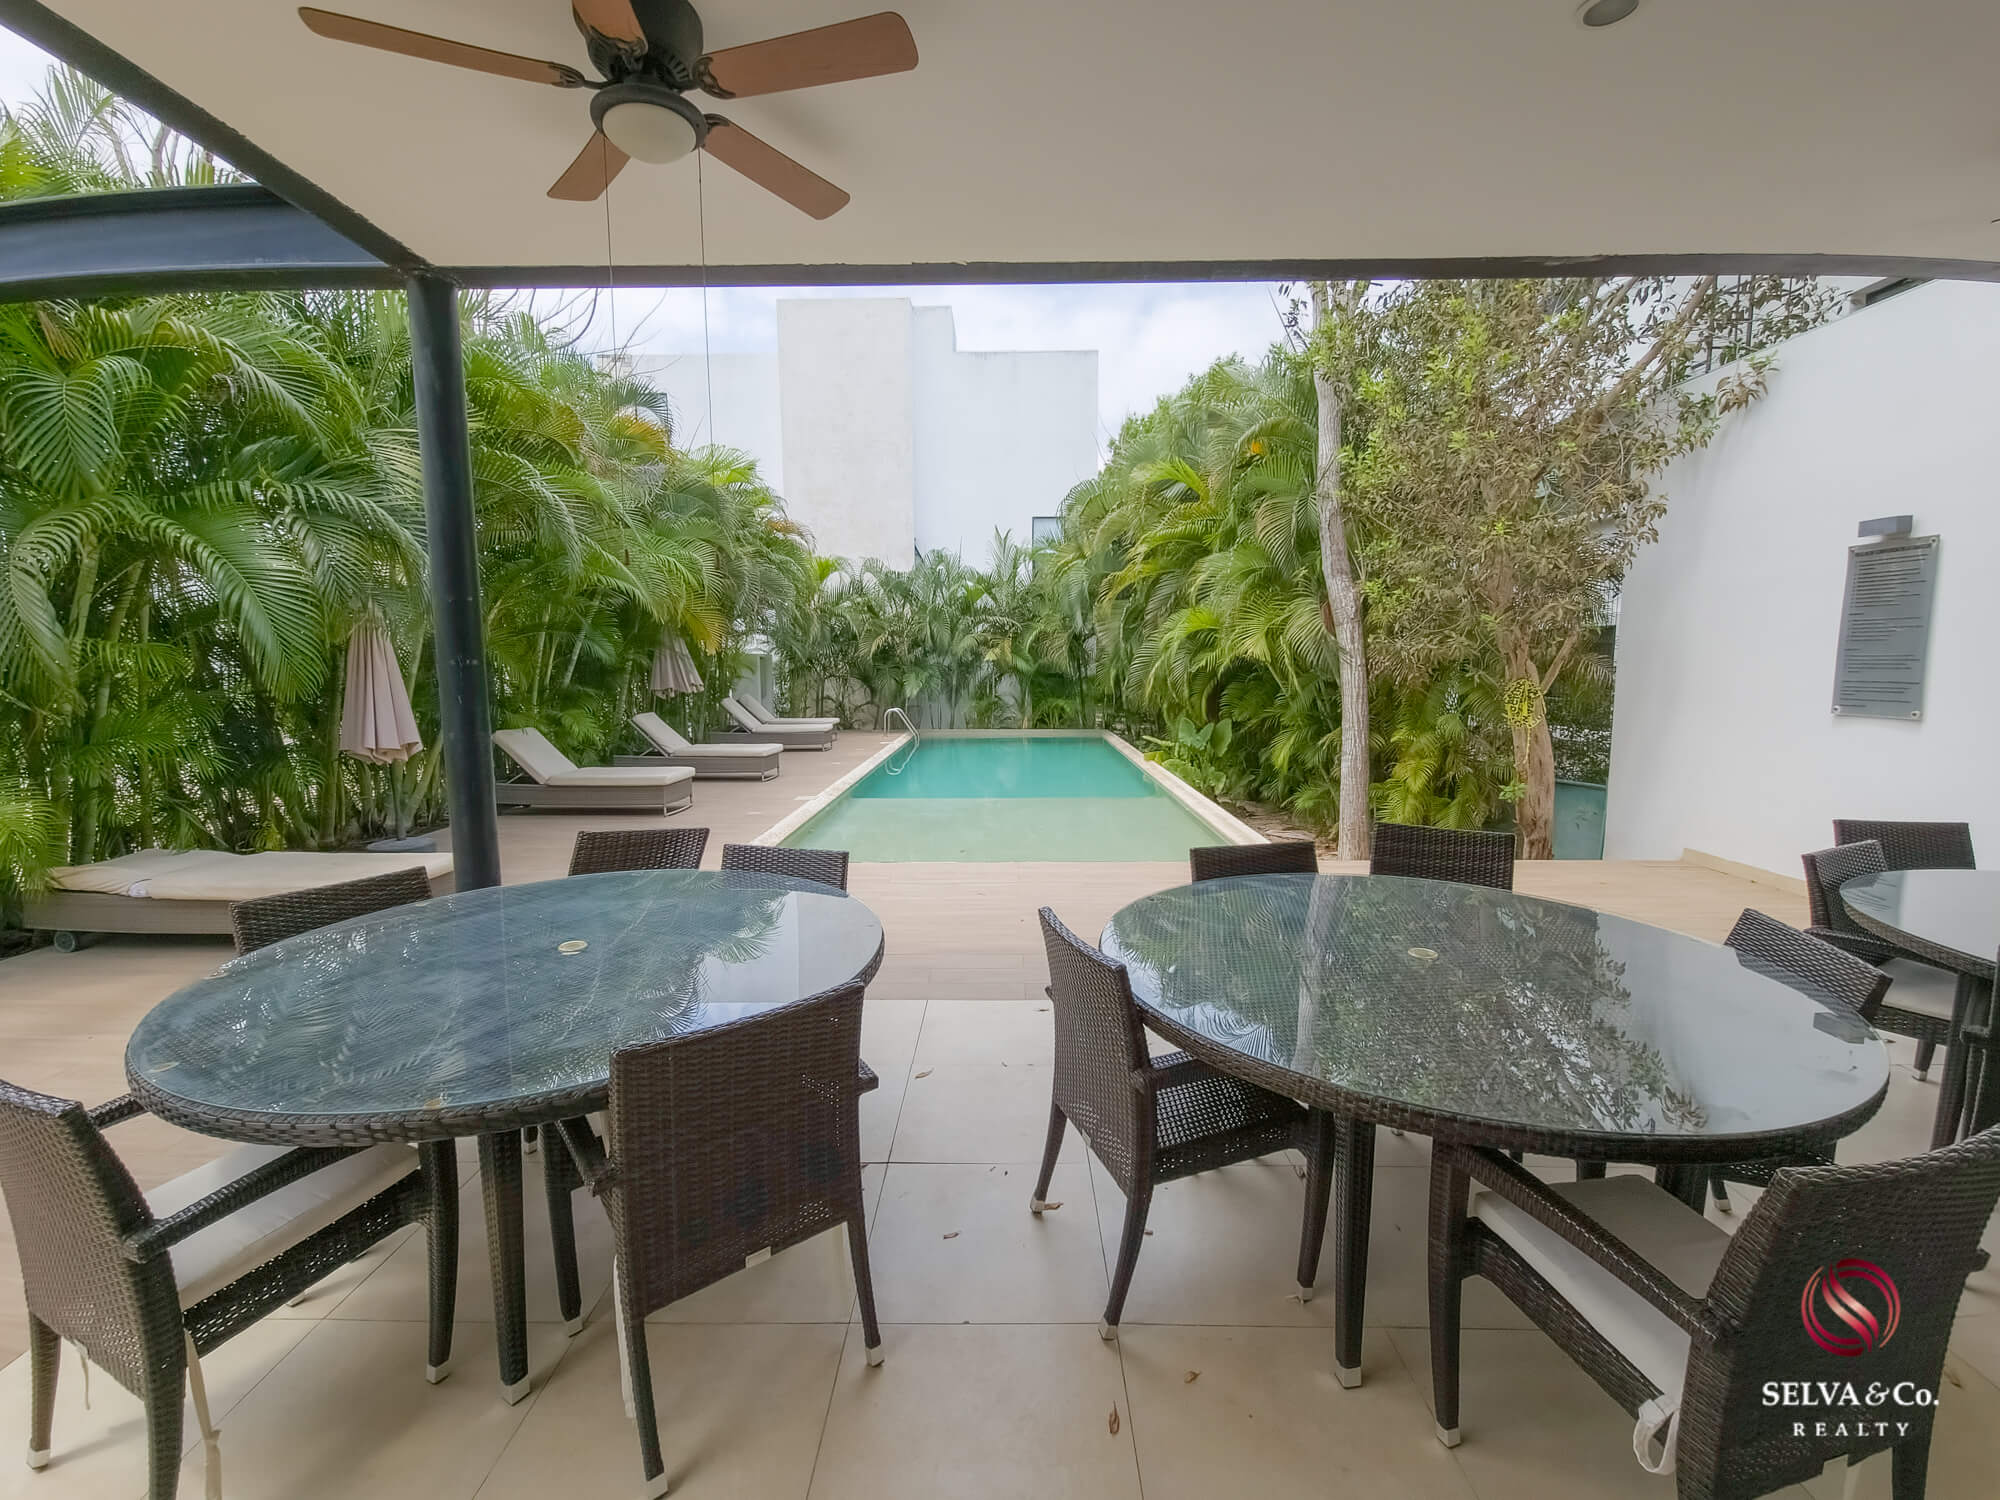 Condominium with roof top pool, barbecue area, business center, concierge, in Villas La Hacienda for sale, Merida North Zone